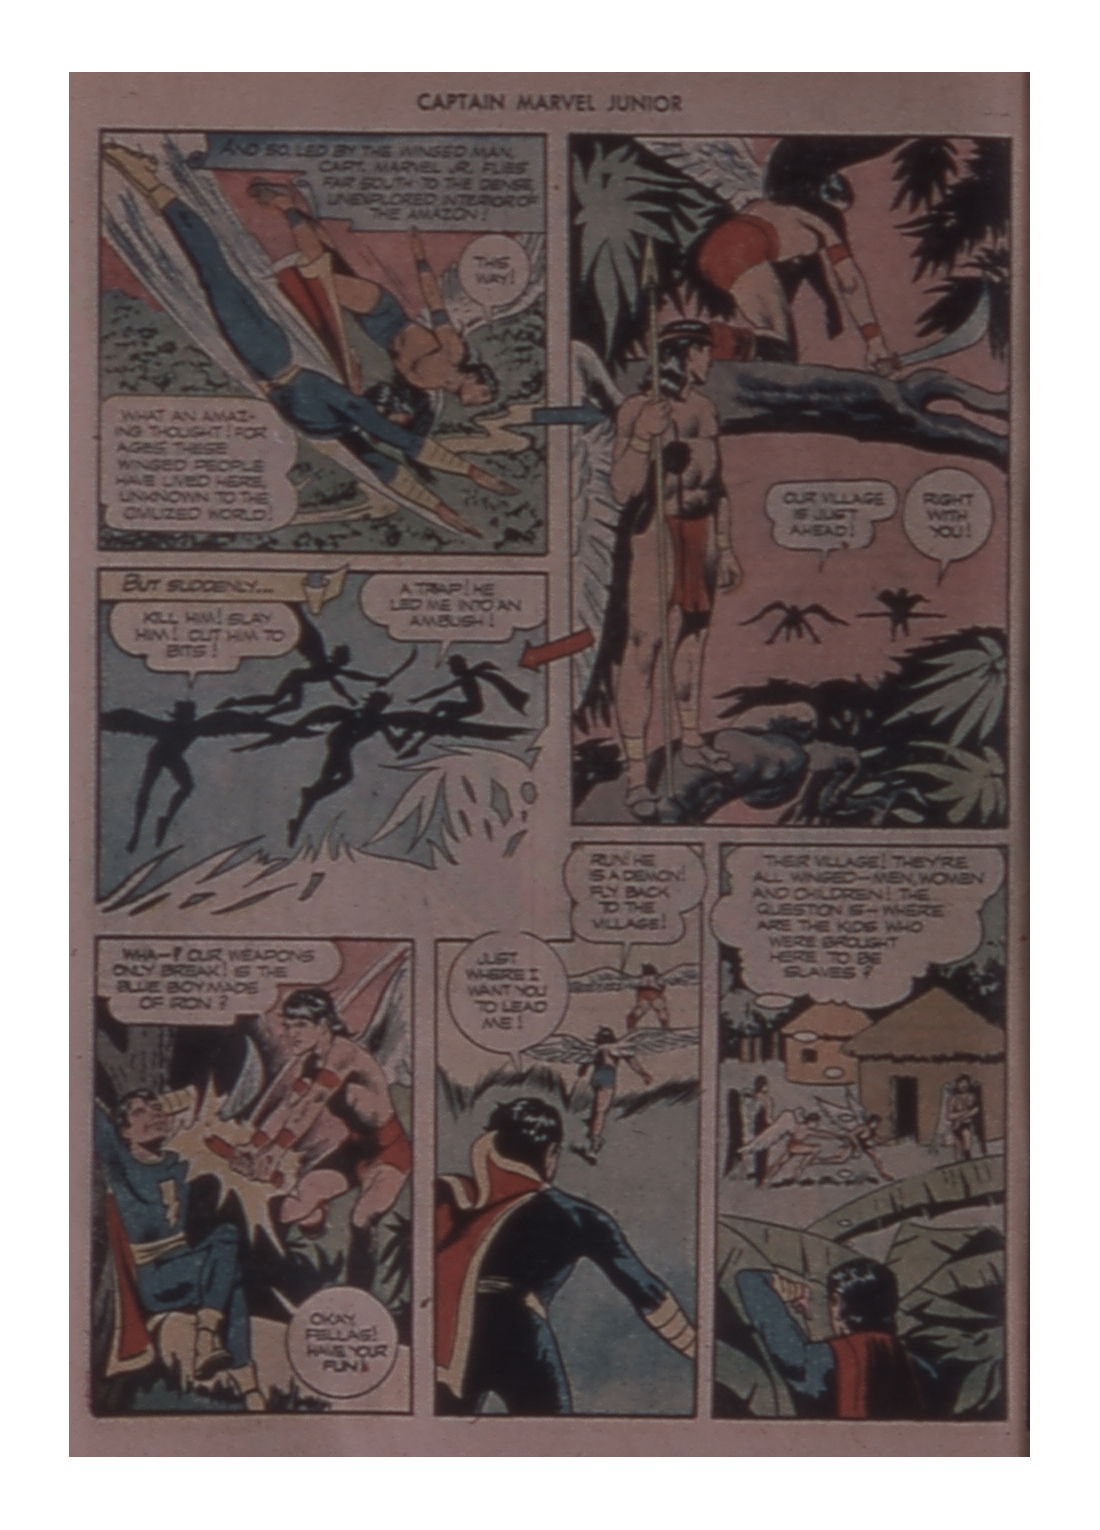 Read online Captain Marvel, Jr. comic -  Issue #47 - 42